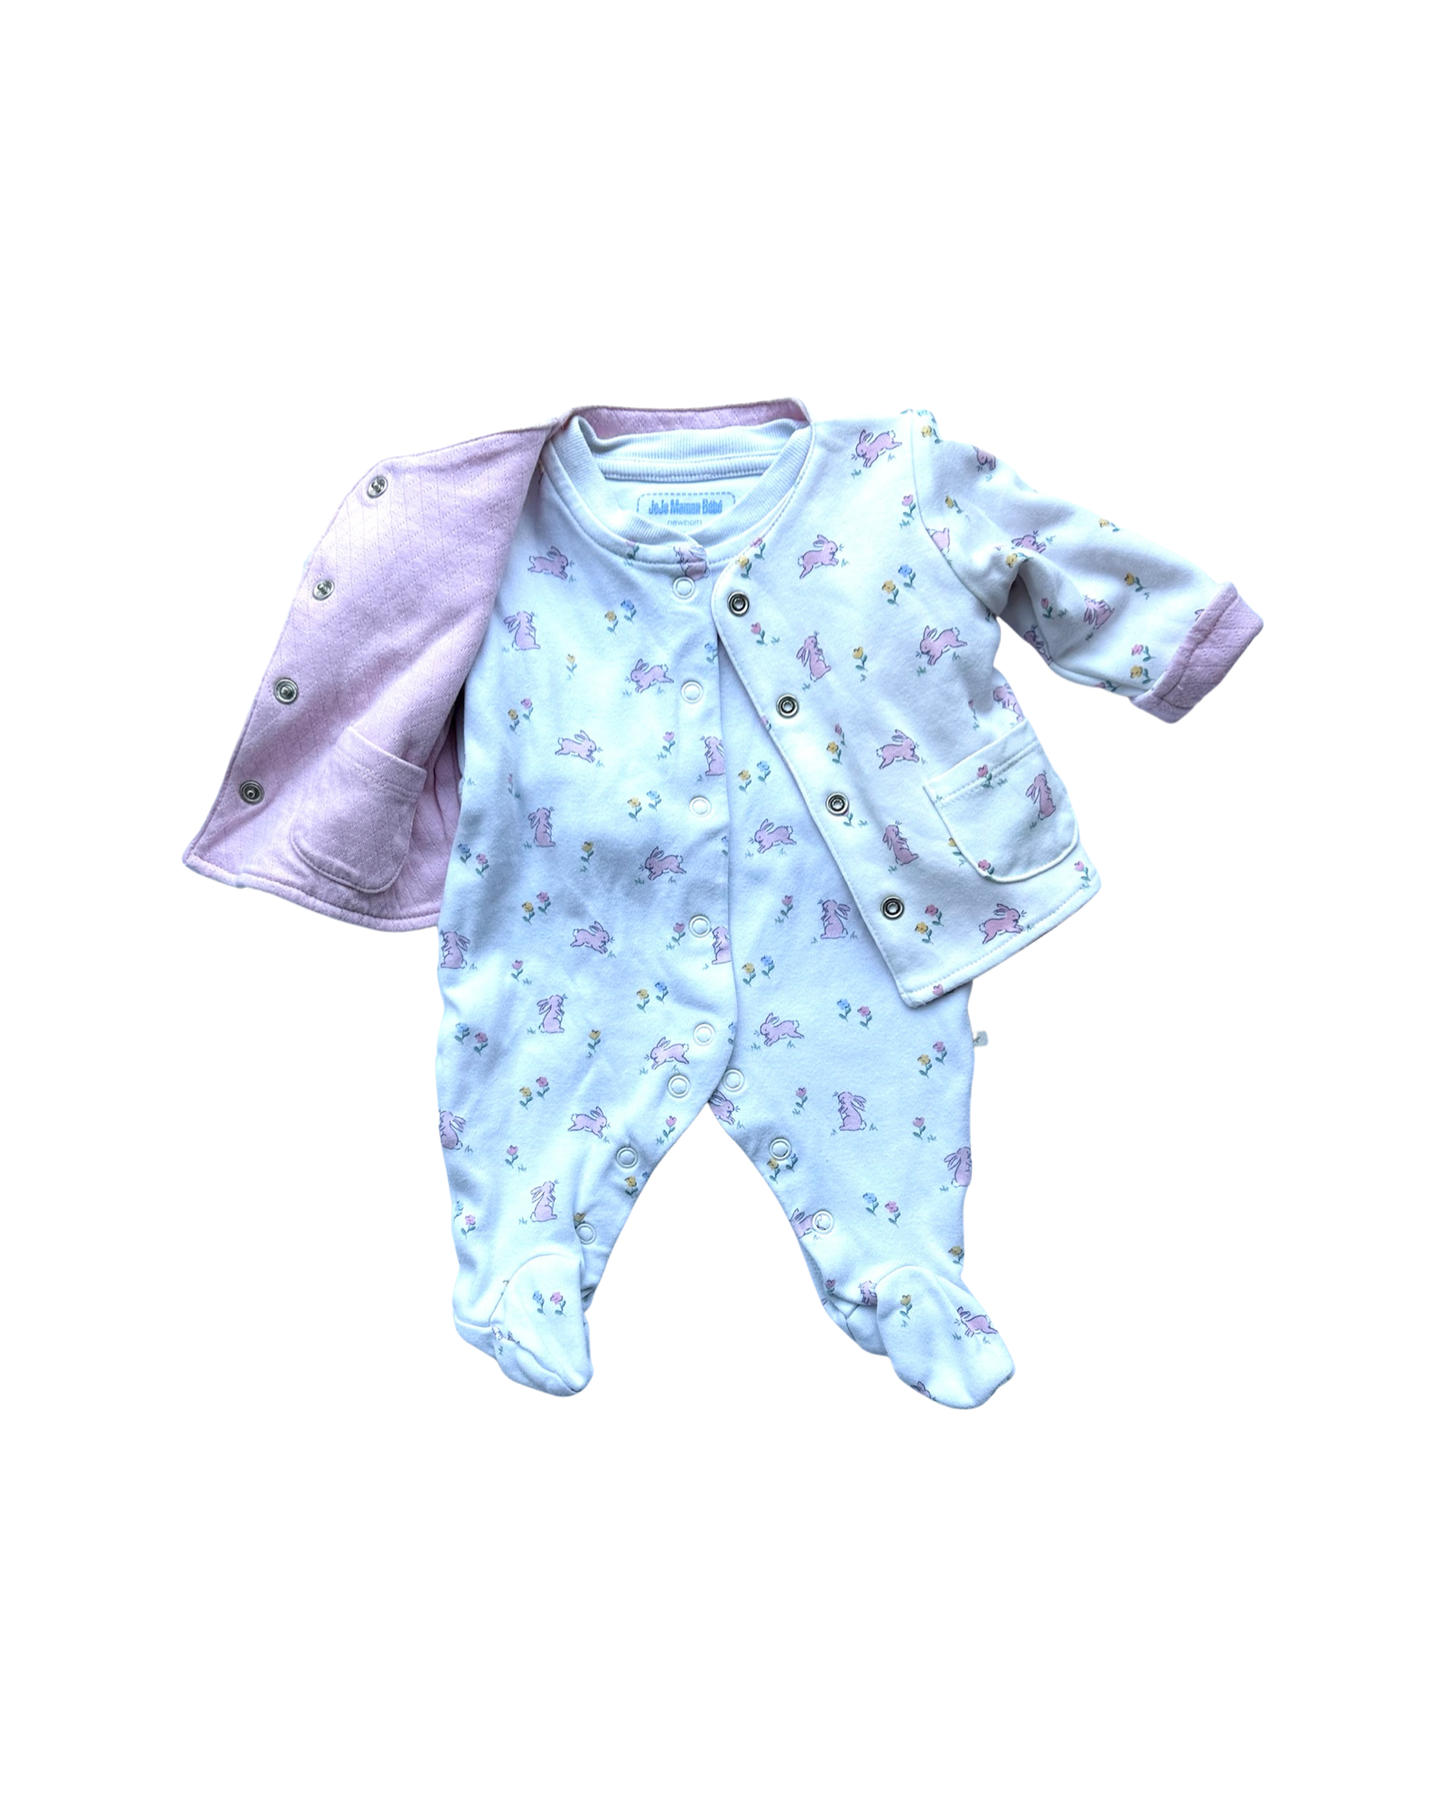 JoJo Maman Bebe bunny print 2 piece sleepsuit & jacket (size newborn)